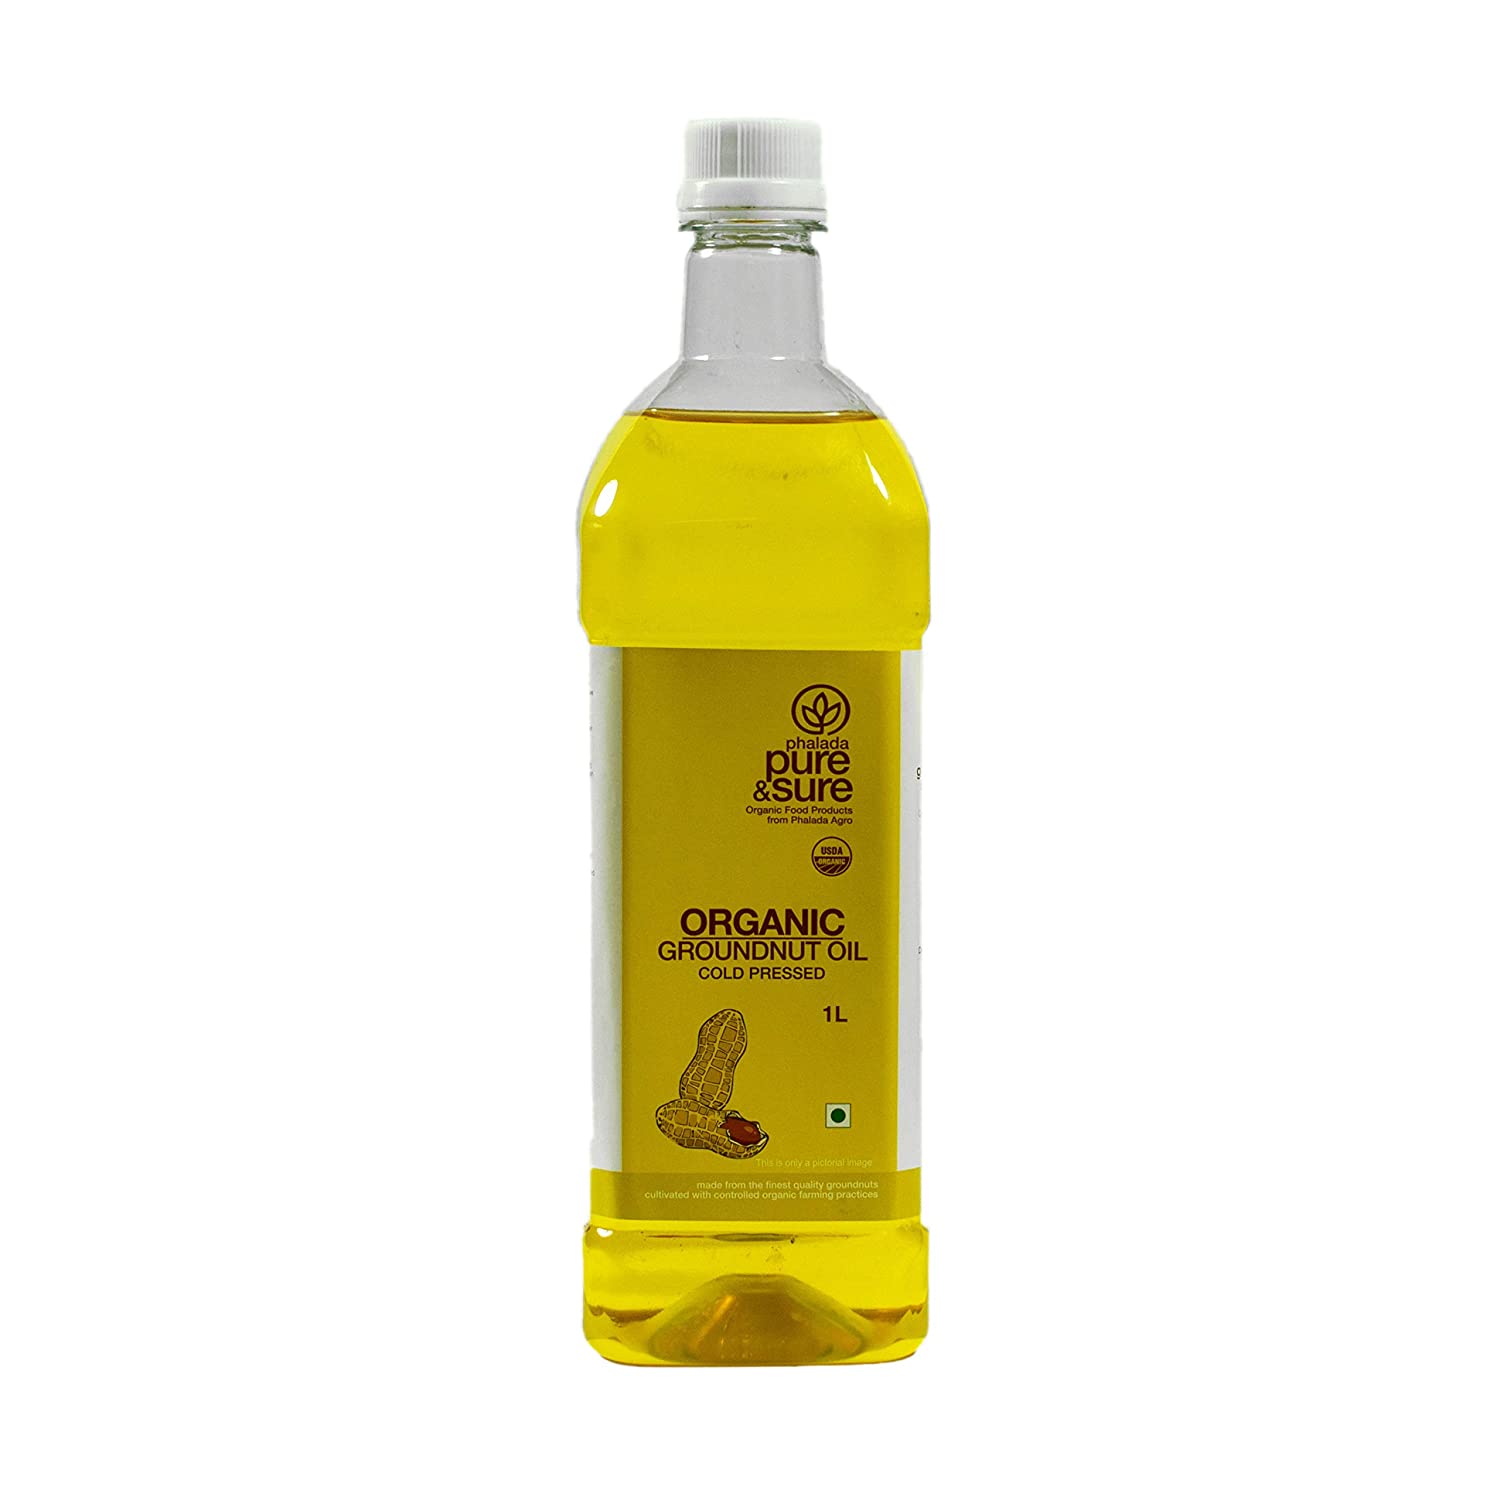 Phalada ground nut oil